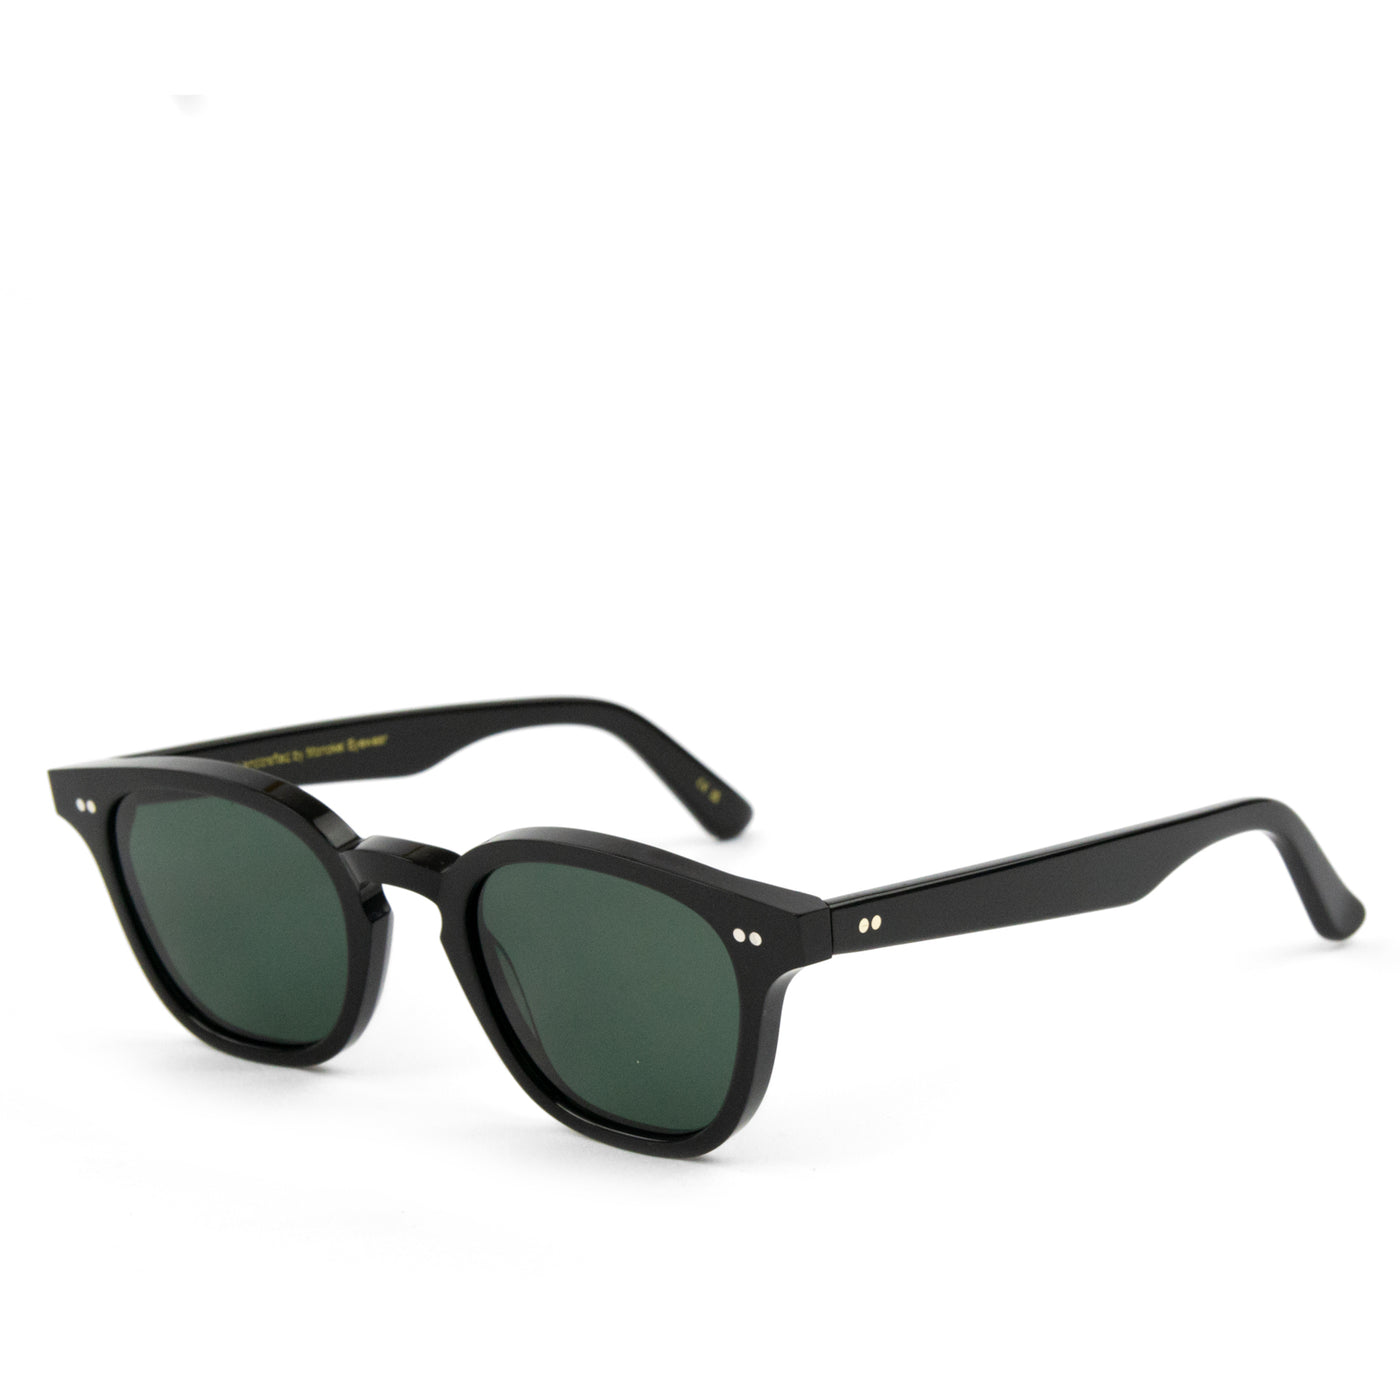 Monokel River Black Sunglasses Green Solid Lens SIDE 